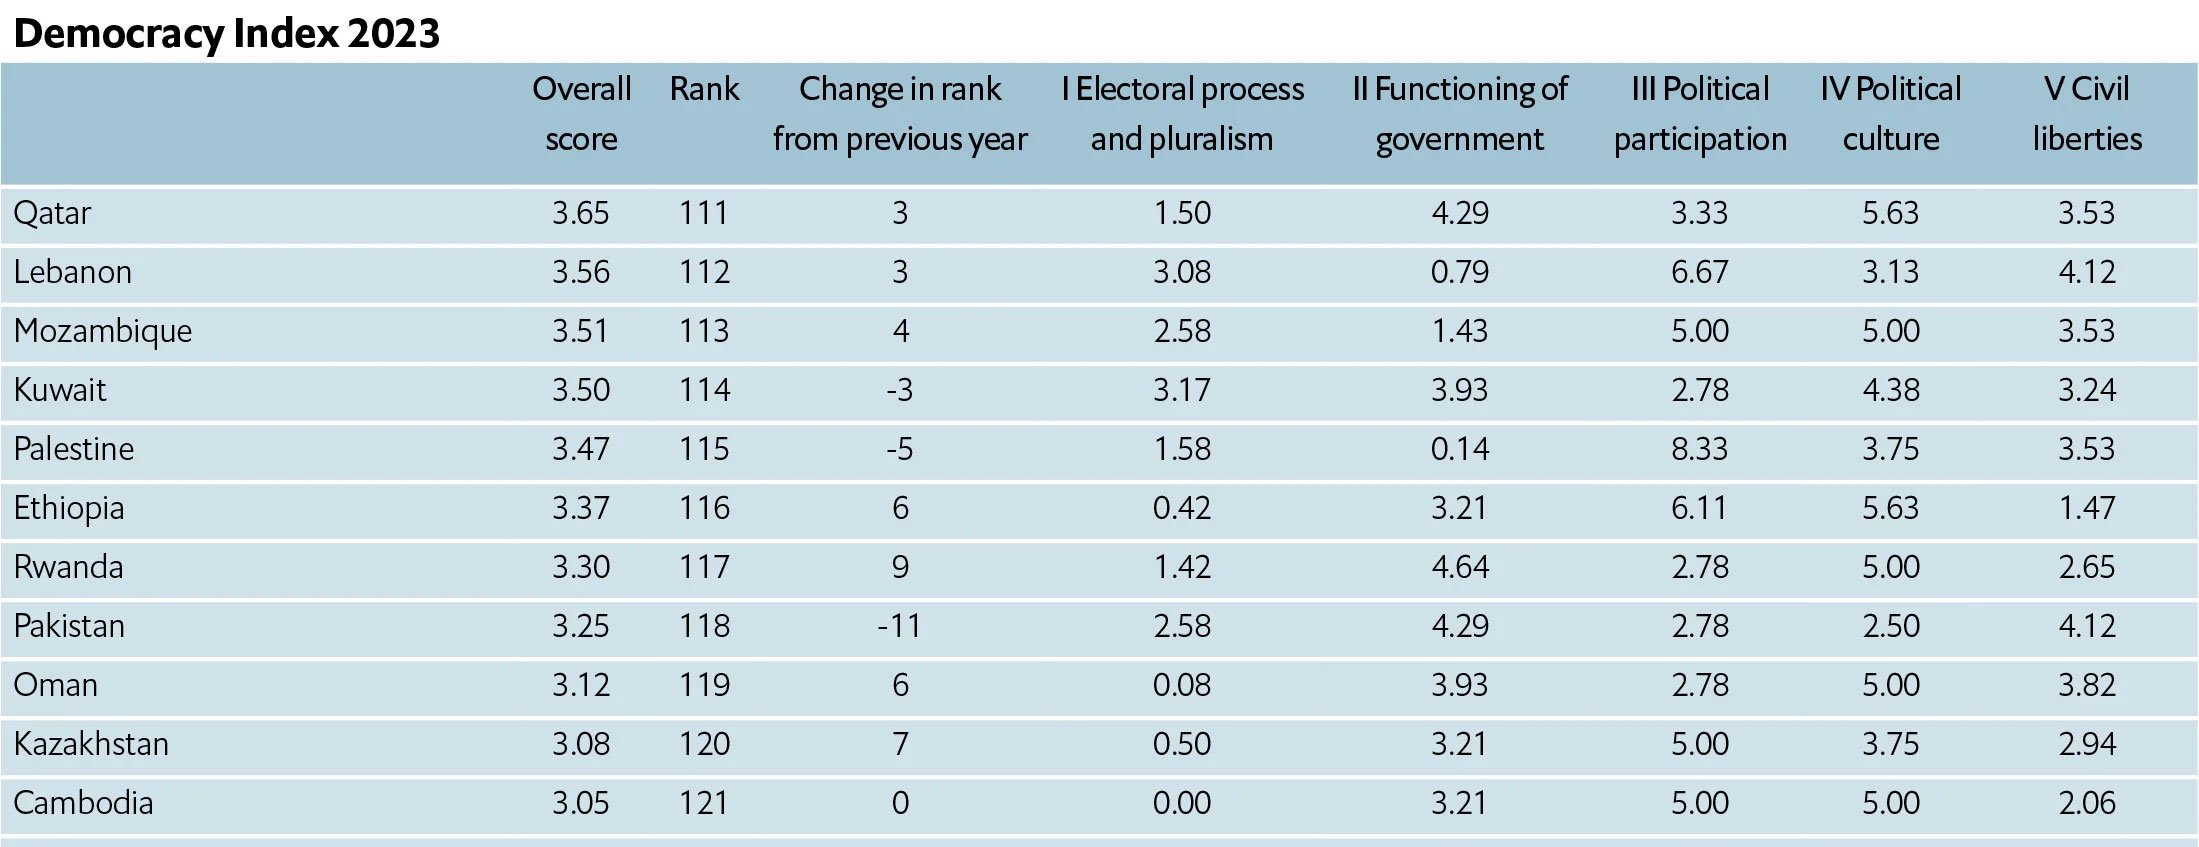 Pakistan downgraded to authoritarian regime on Democracy Index